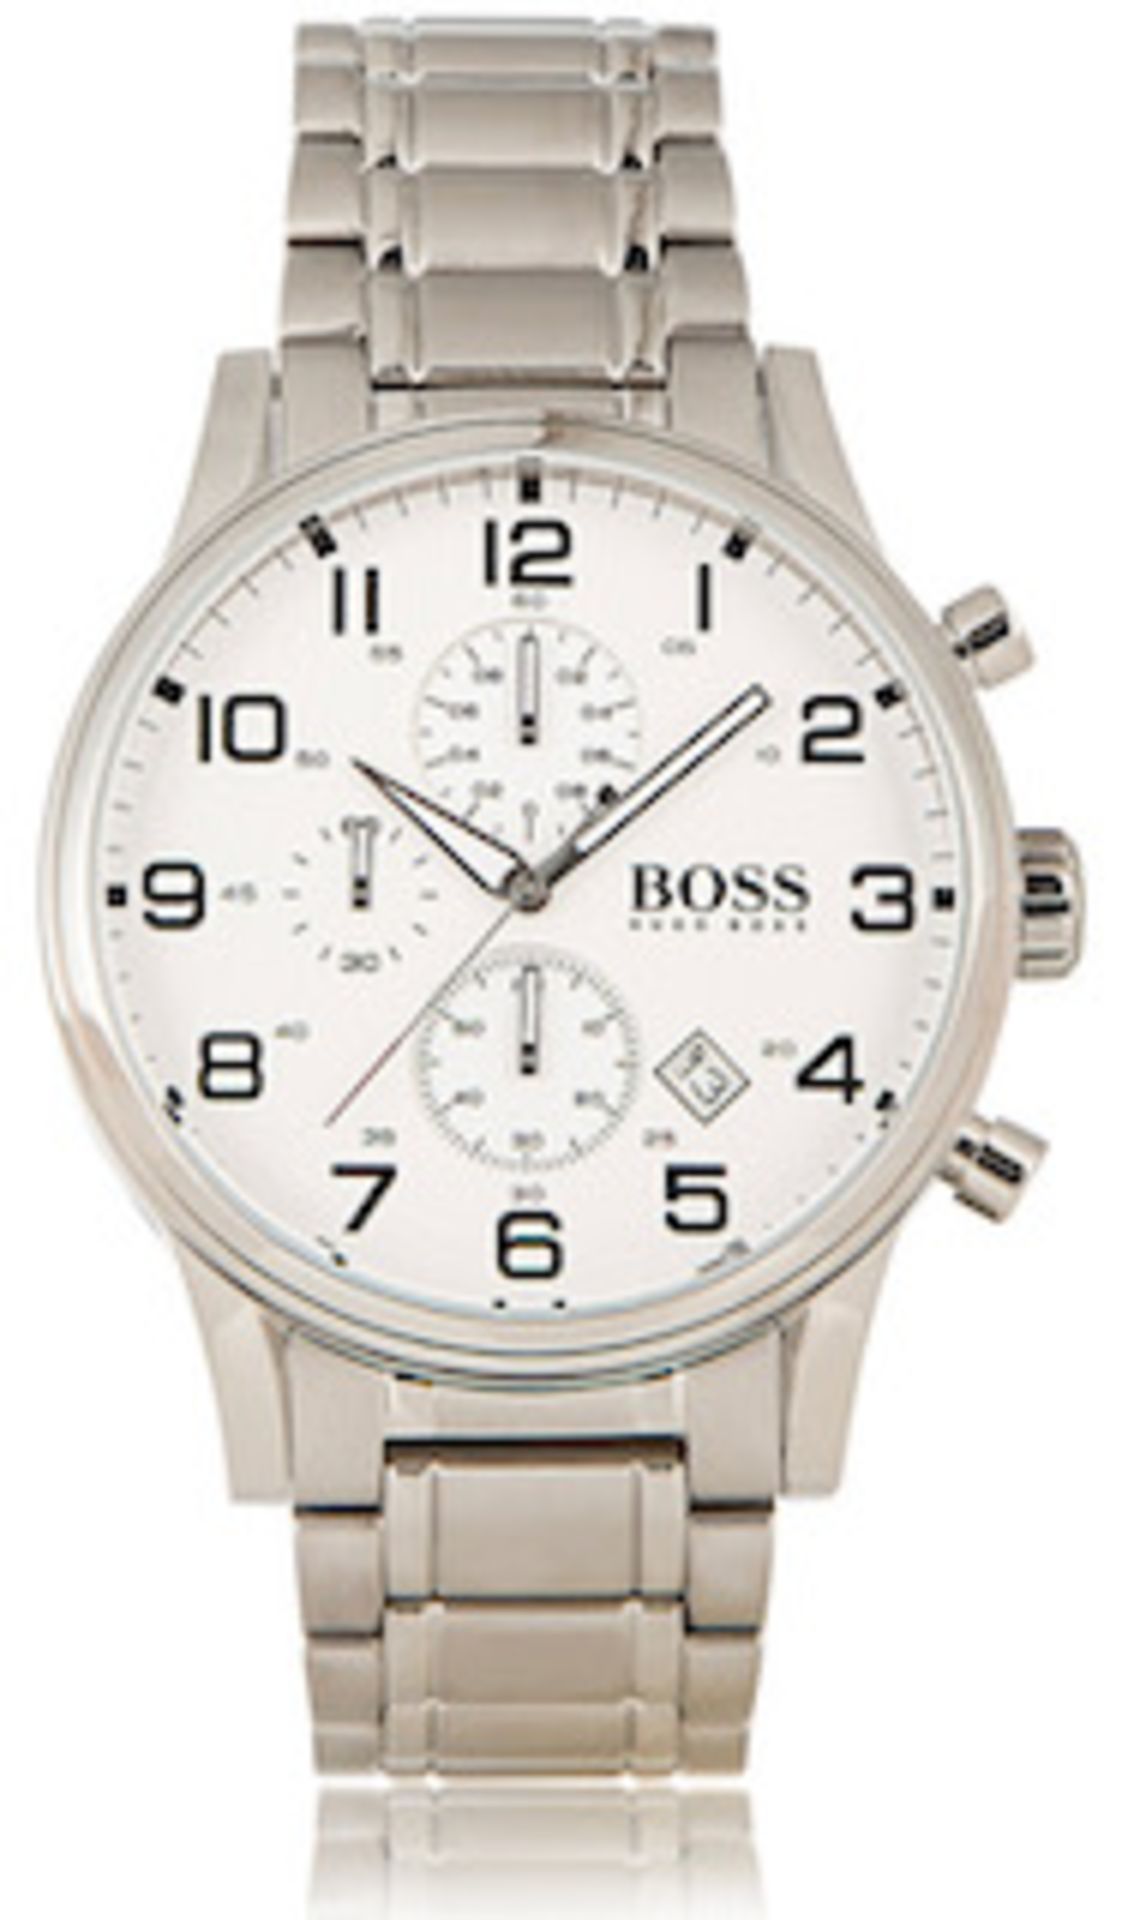 HUGO BOSS Men's Aeroliner Silver Bracelet Chronograph Watch 1513182 - Image 4 of 7